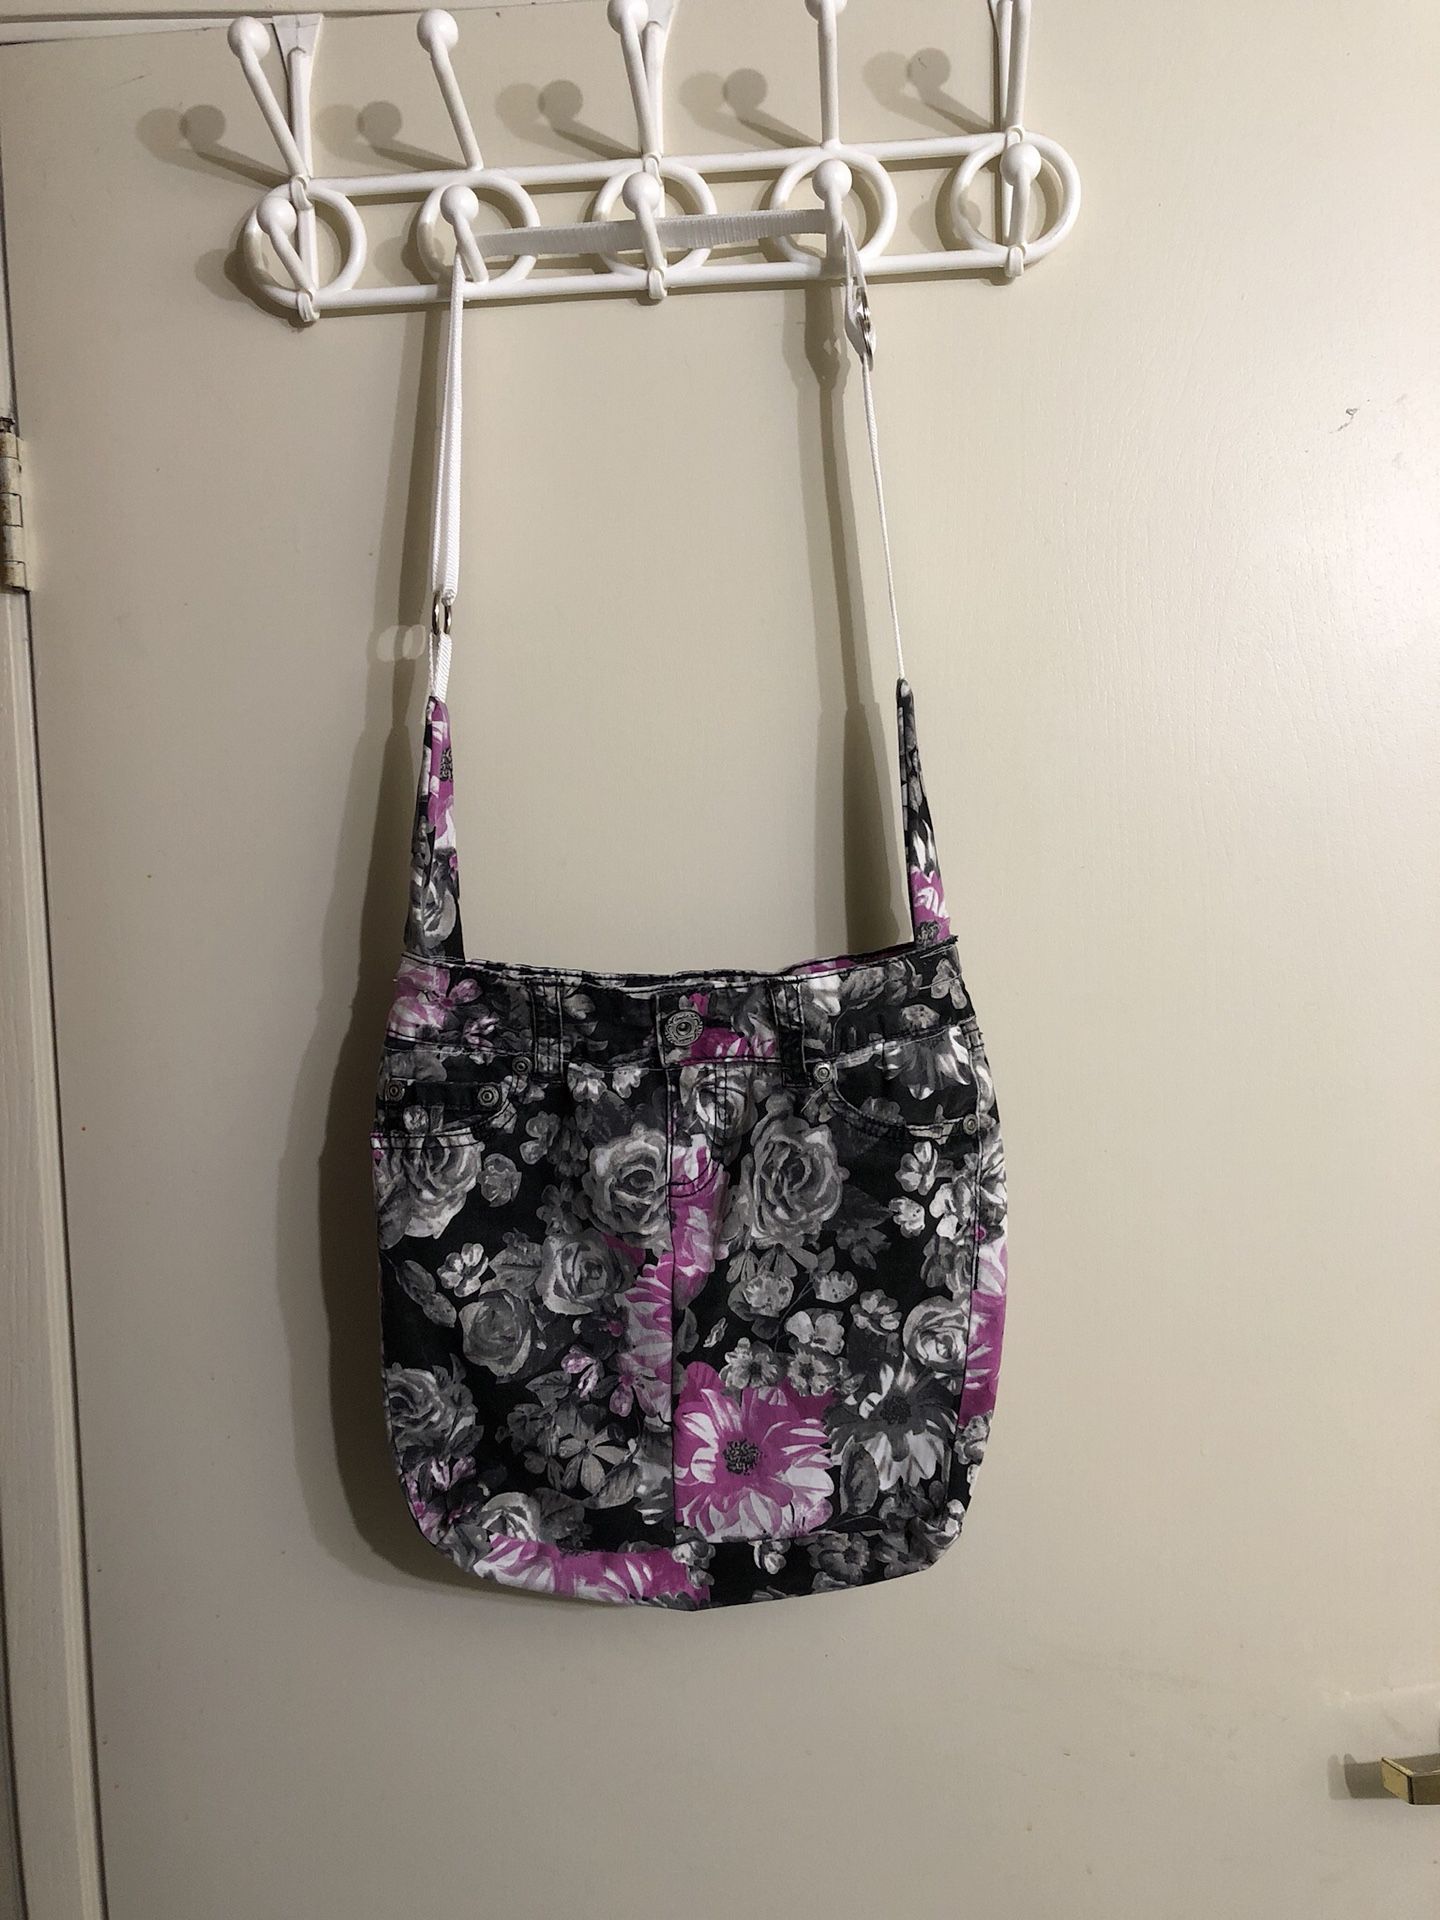 Handmade upcyled purse